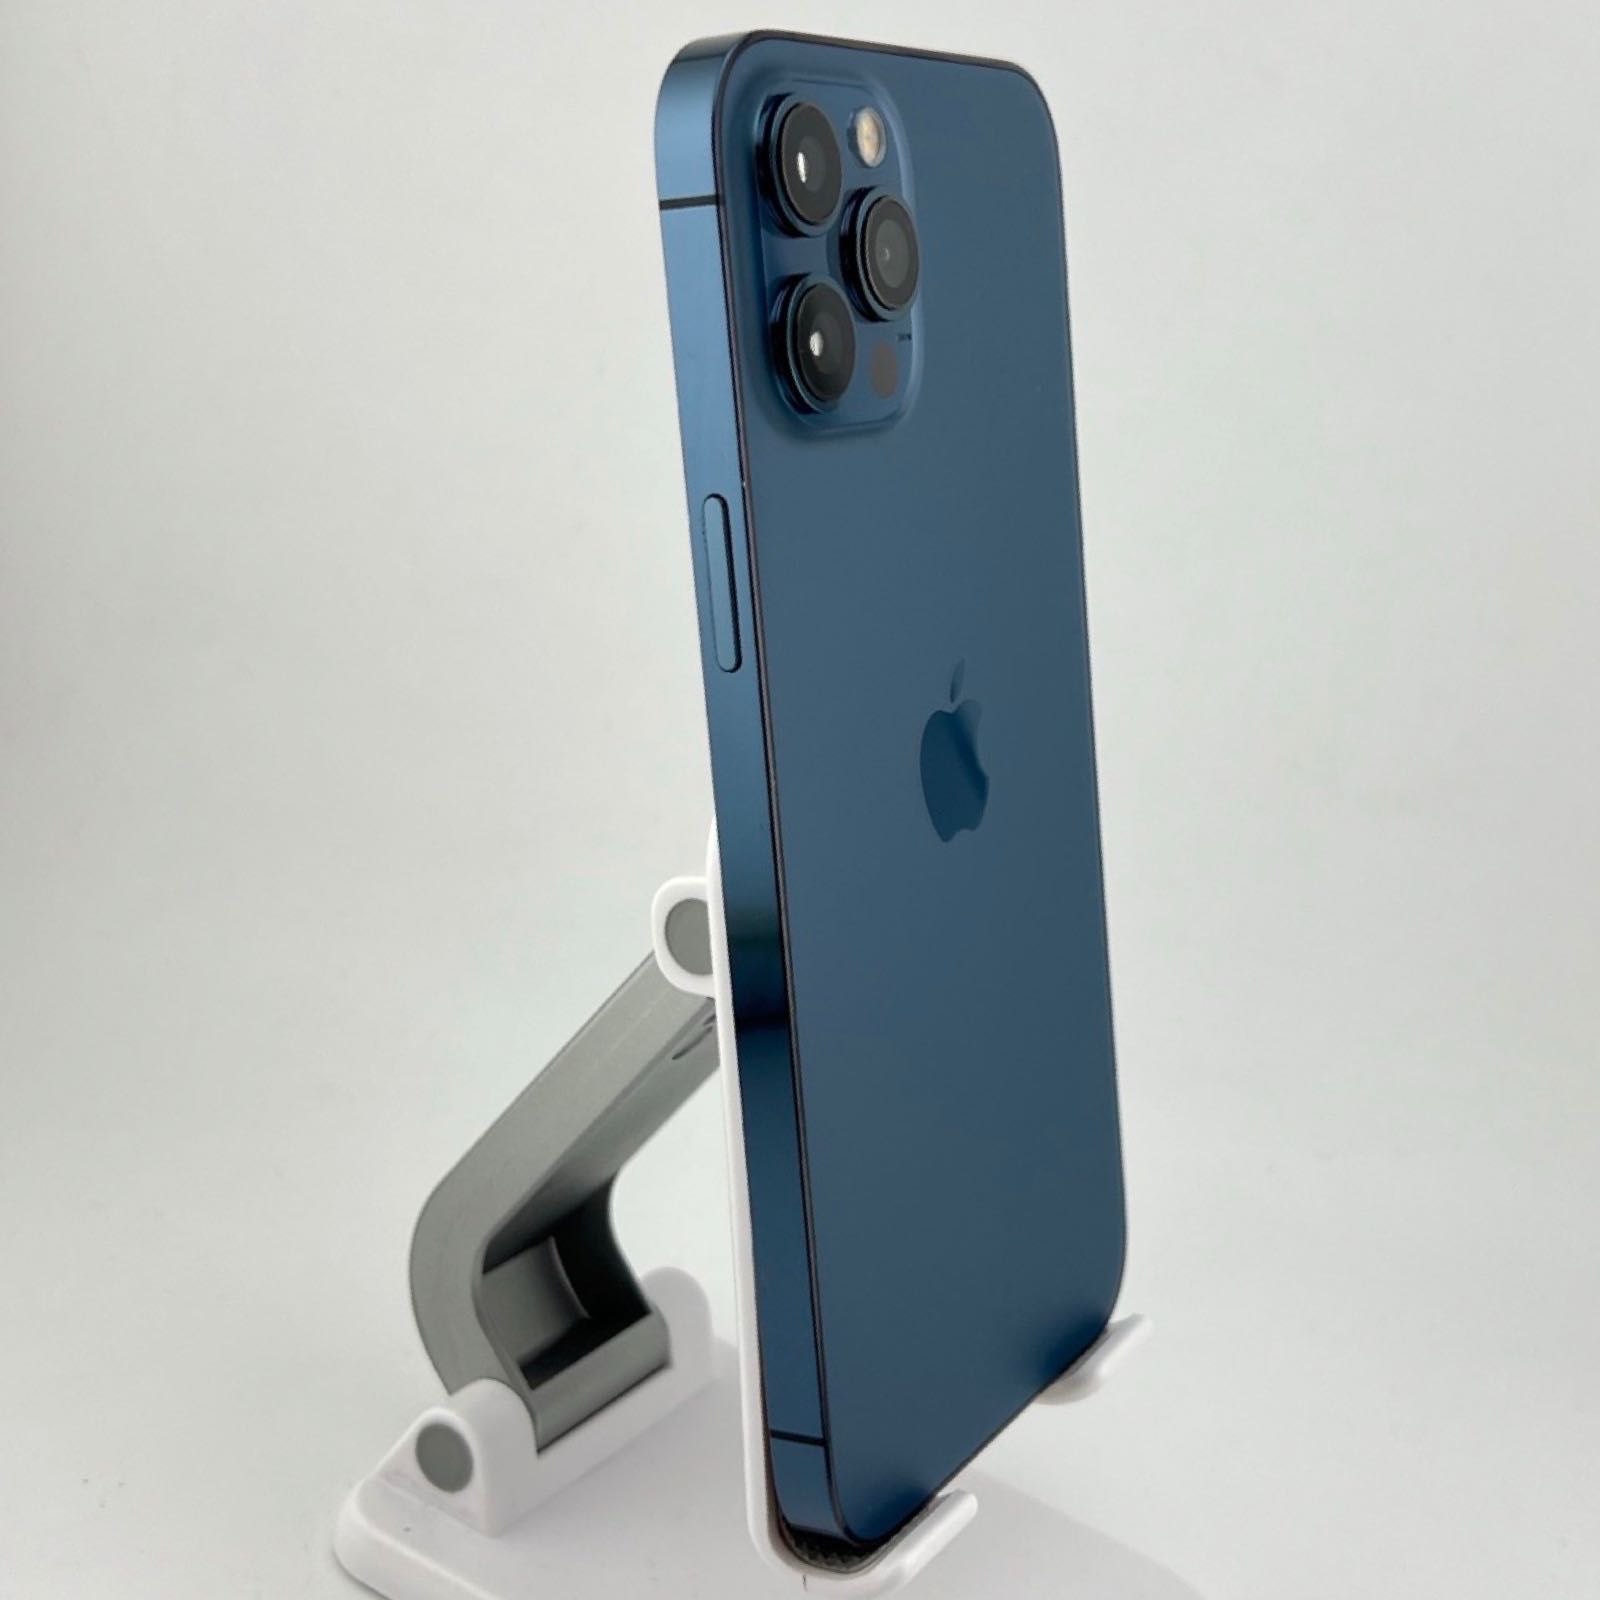 iPhone 12 Pro Max 128GB Pacific Blue ID502 | TrueGSM